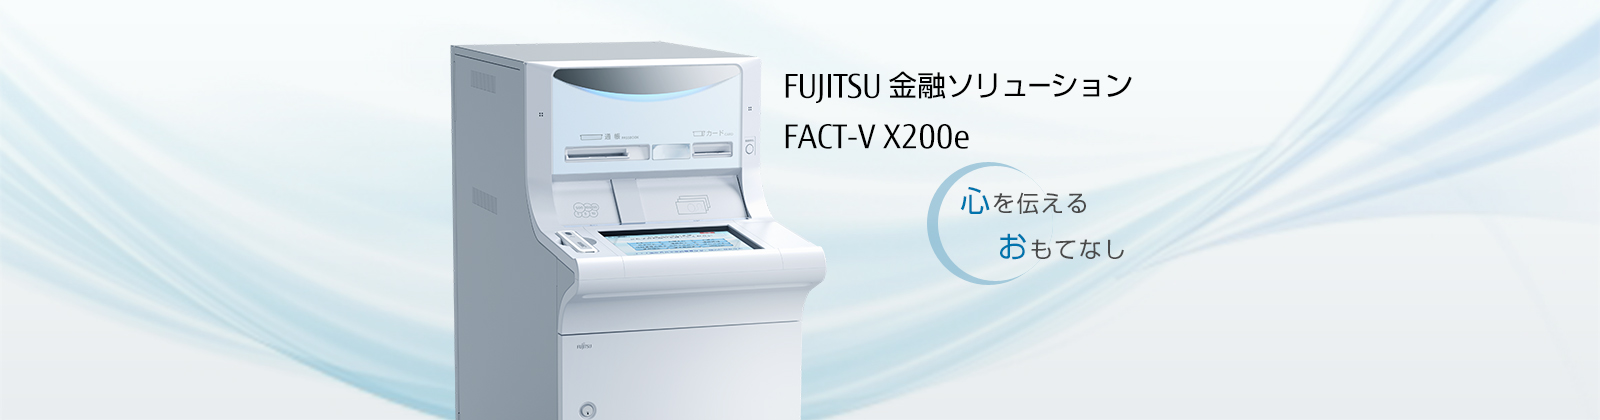 FUJITSU 金融ソリューション FACT-V X200e。心を伝える、おもてなし。